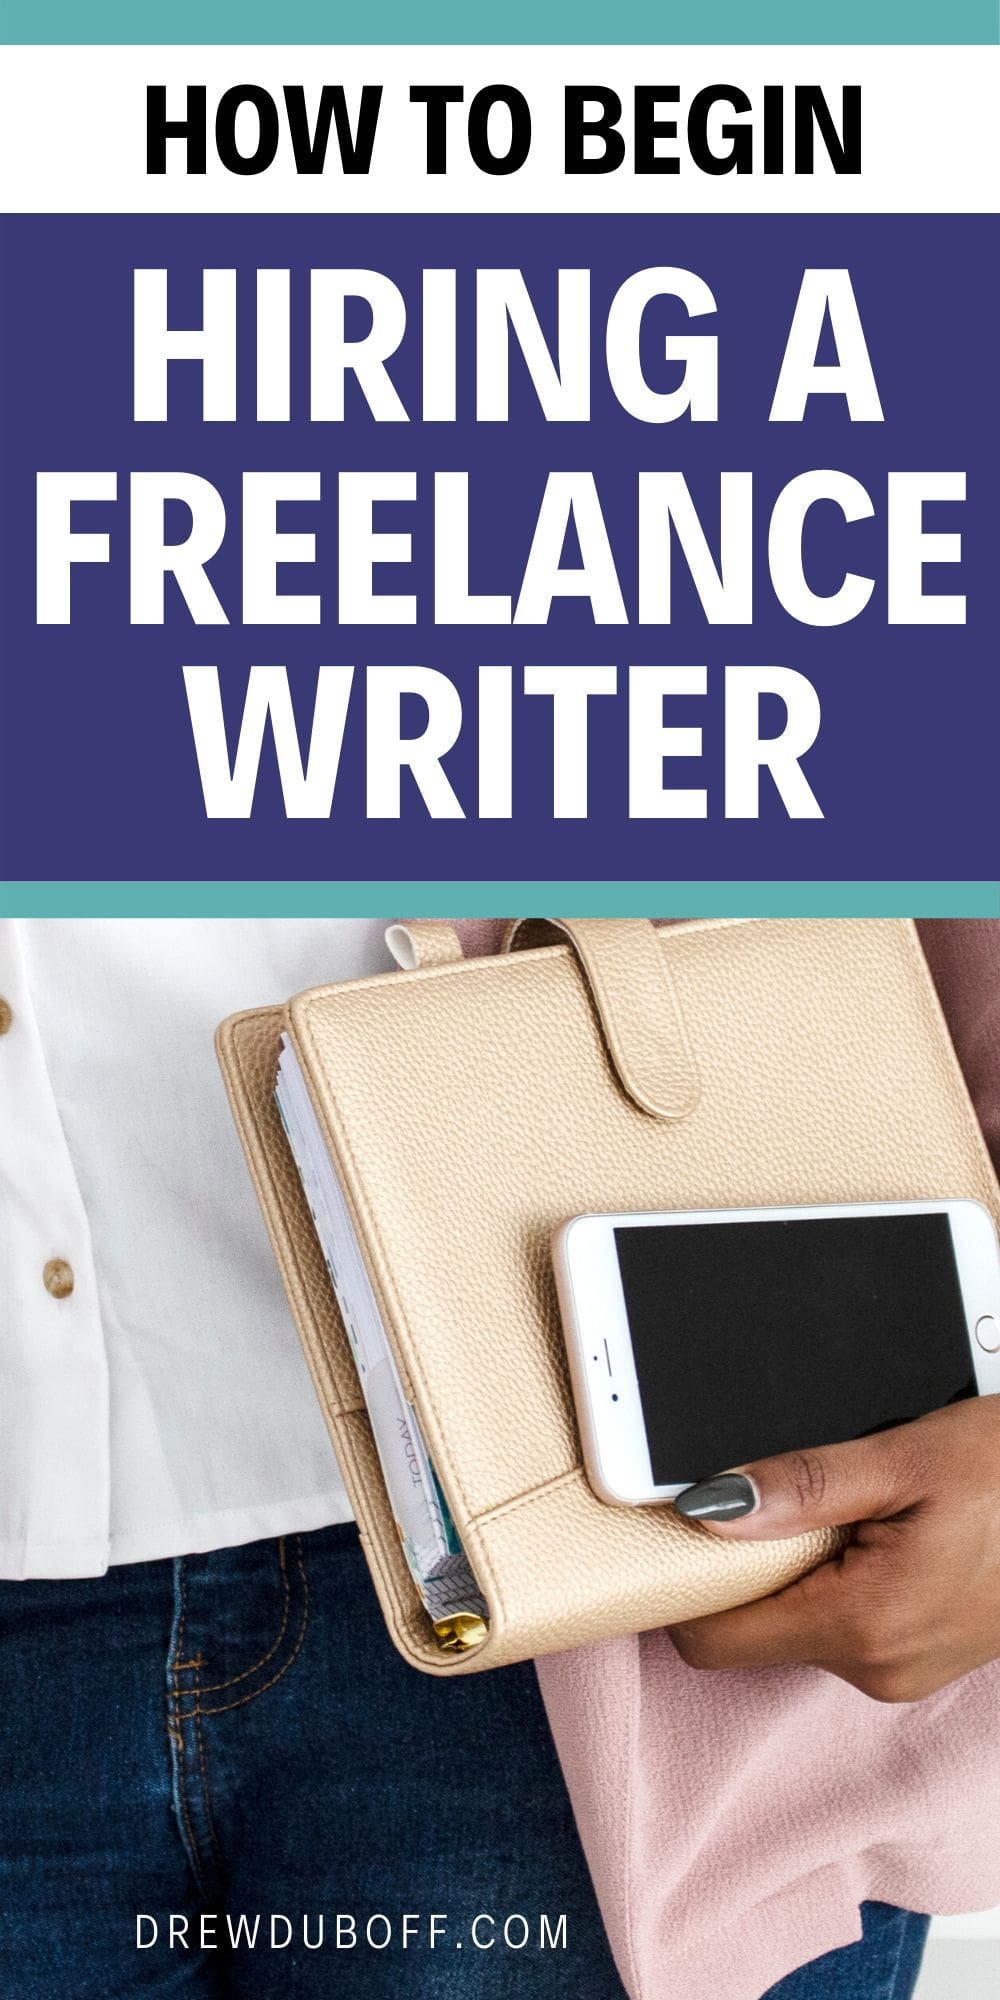 How to Begin Hiring a Freelance Writer